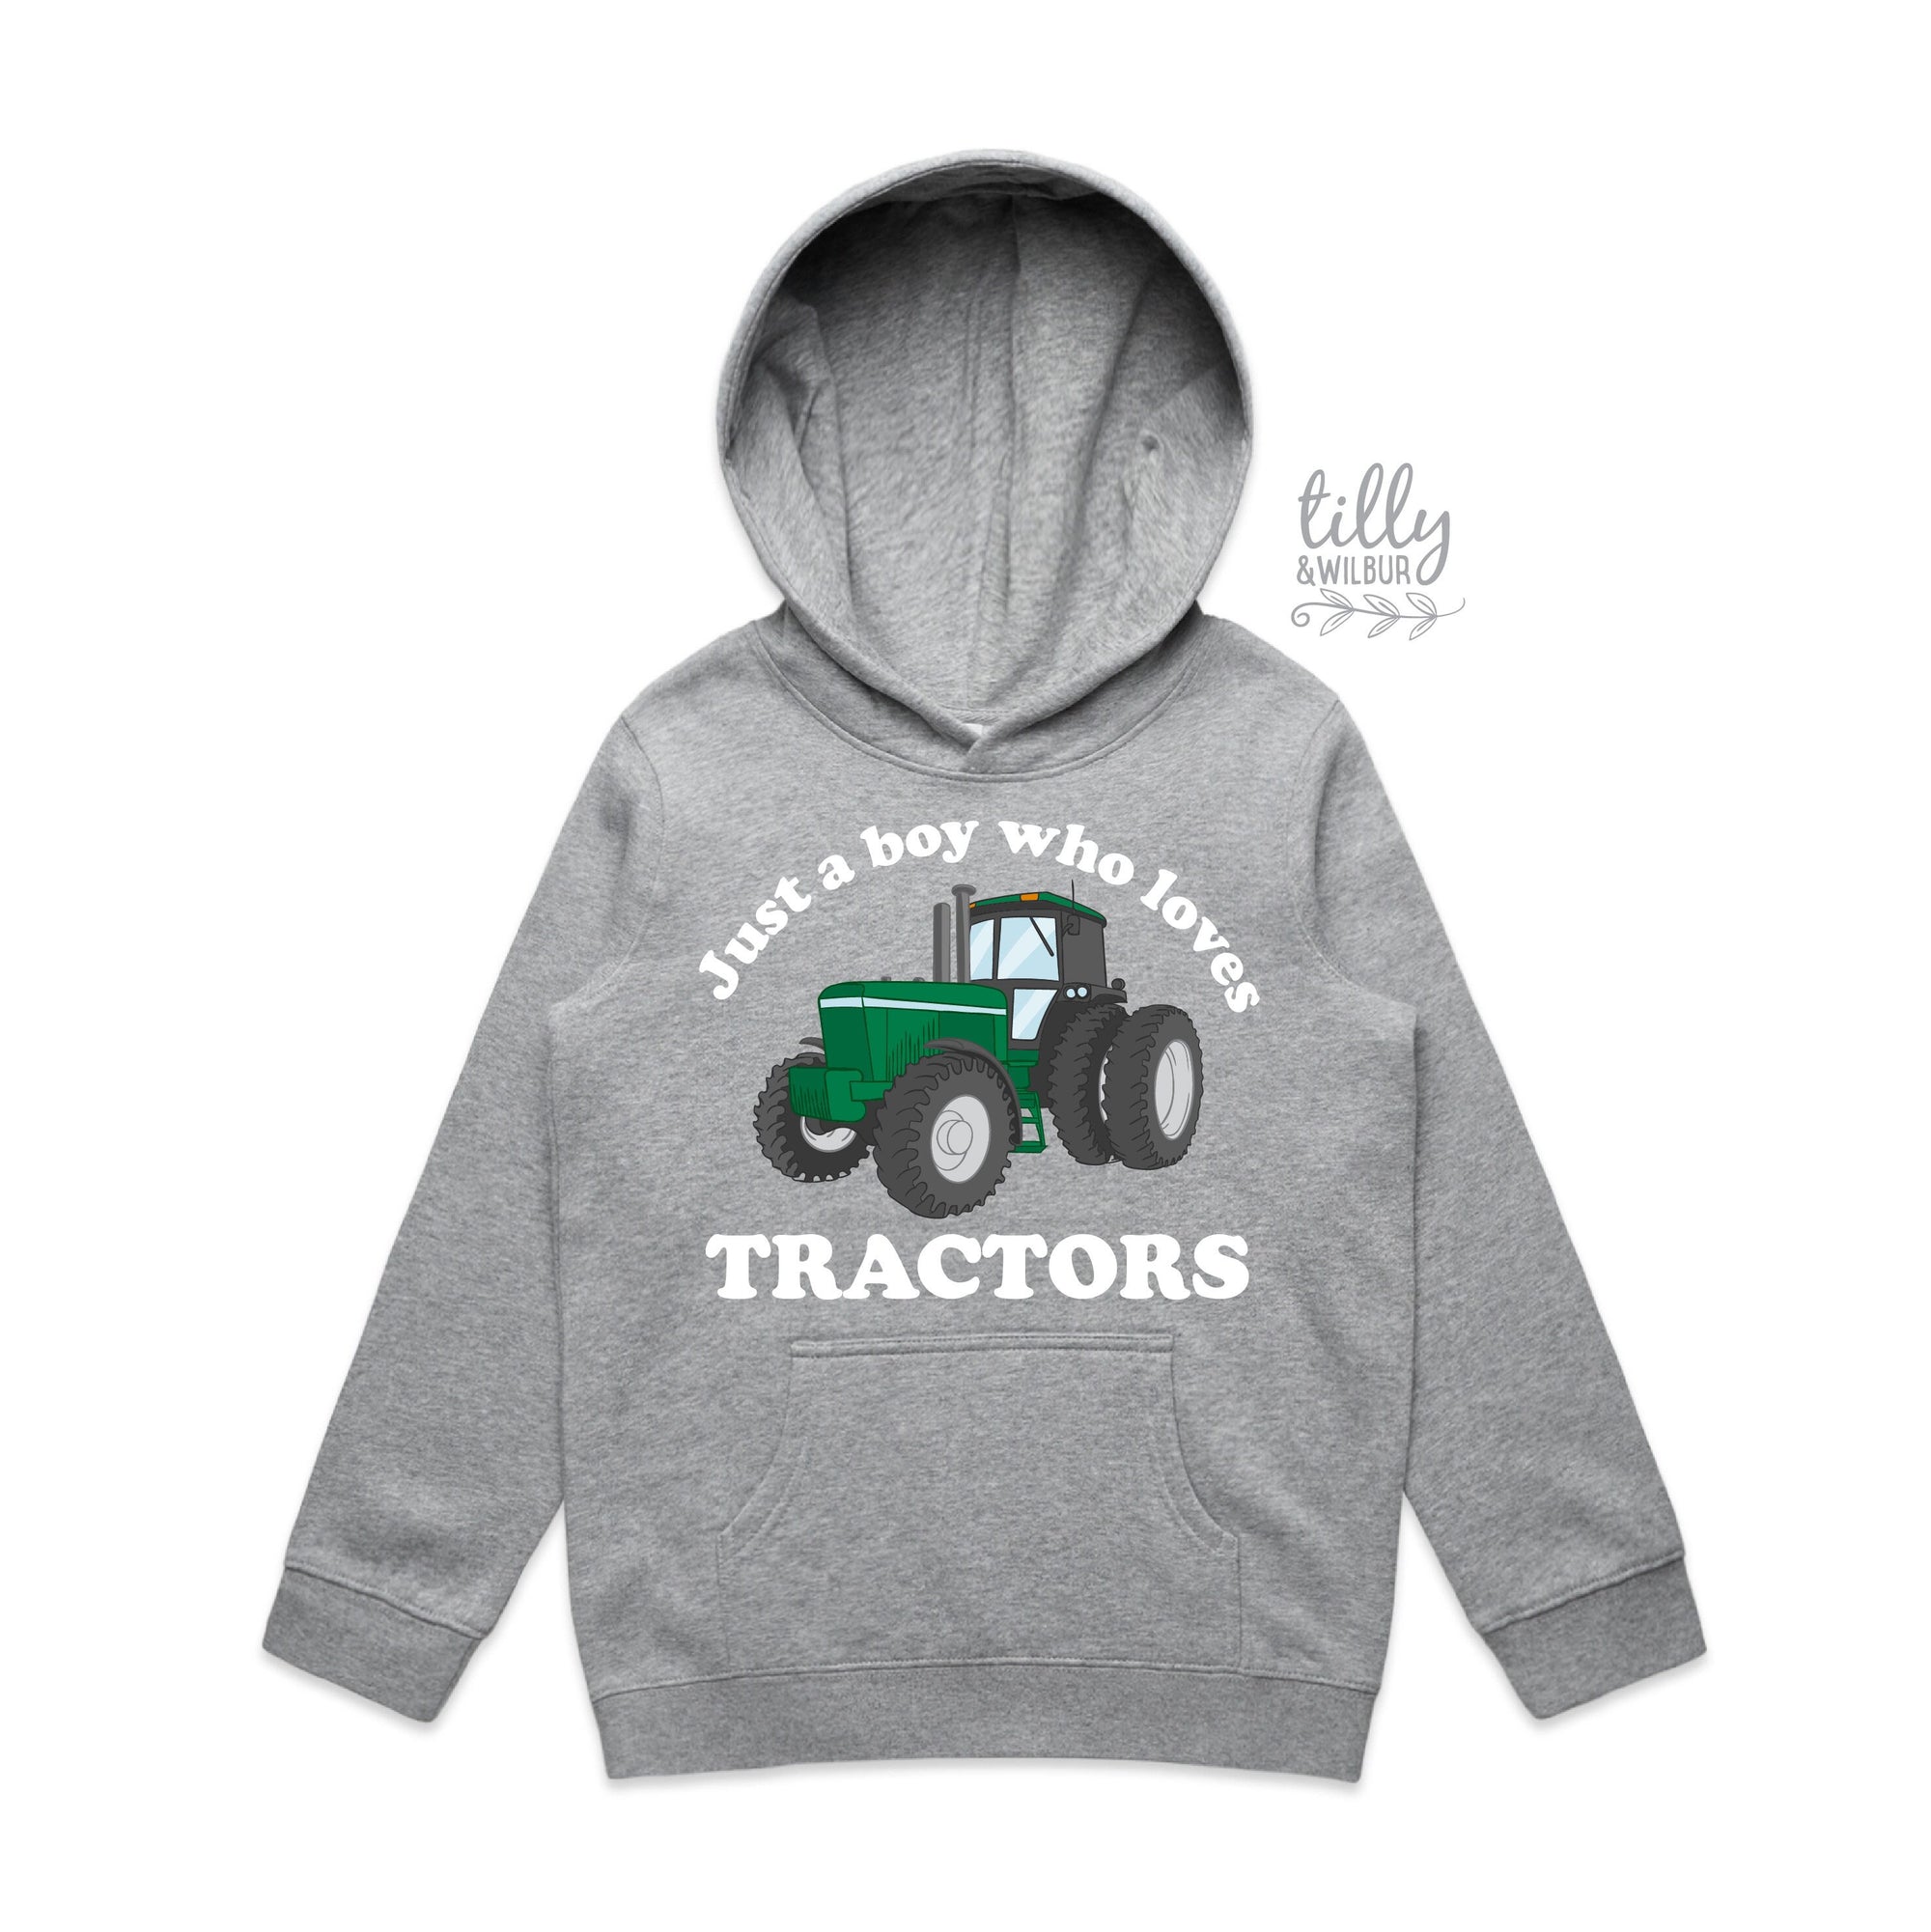 Just a Boy Who Loves Tractors Hoodie, Tractor Sweatshirt, I Love Tractors Jumper, Farm Life, Tractor Lover Gift, Tractor Shirt, Farmer Shirt